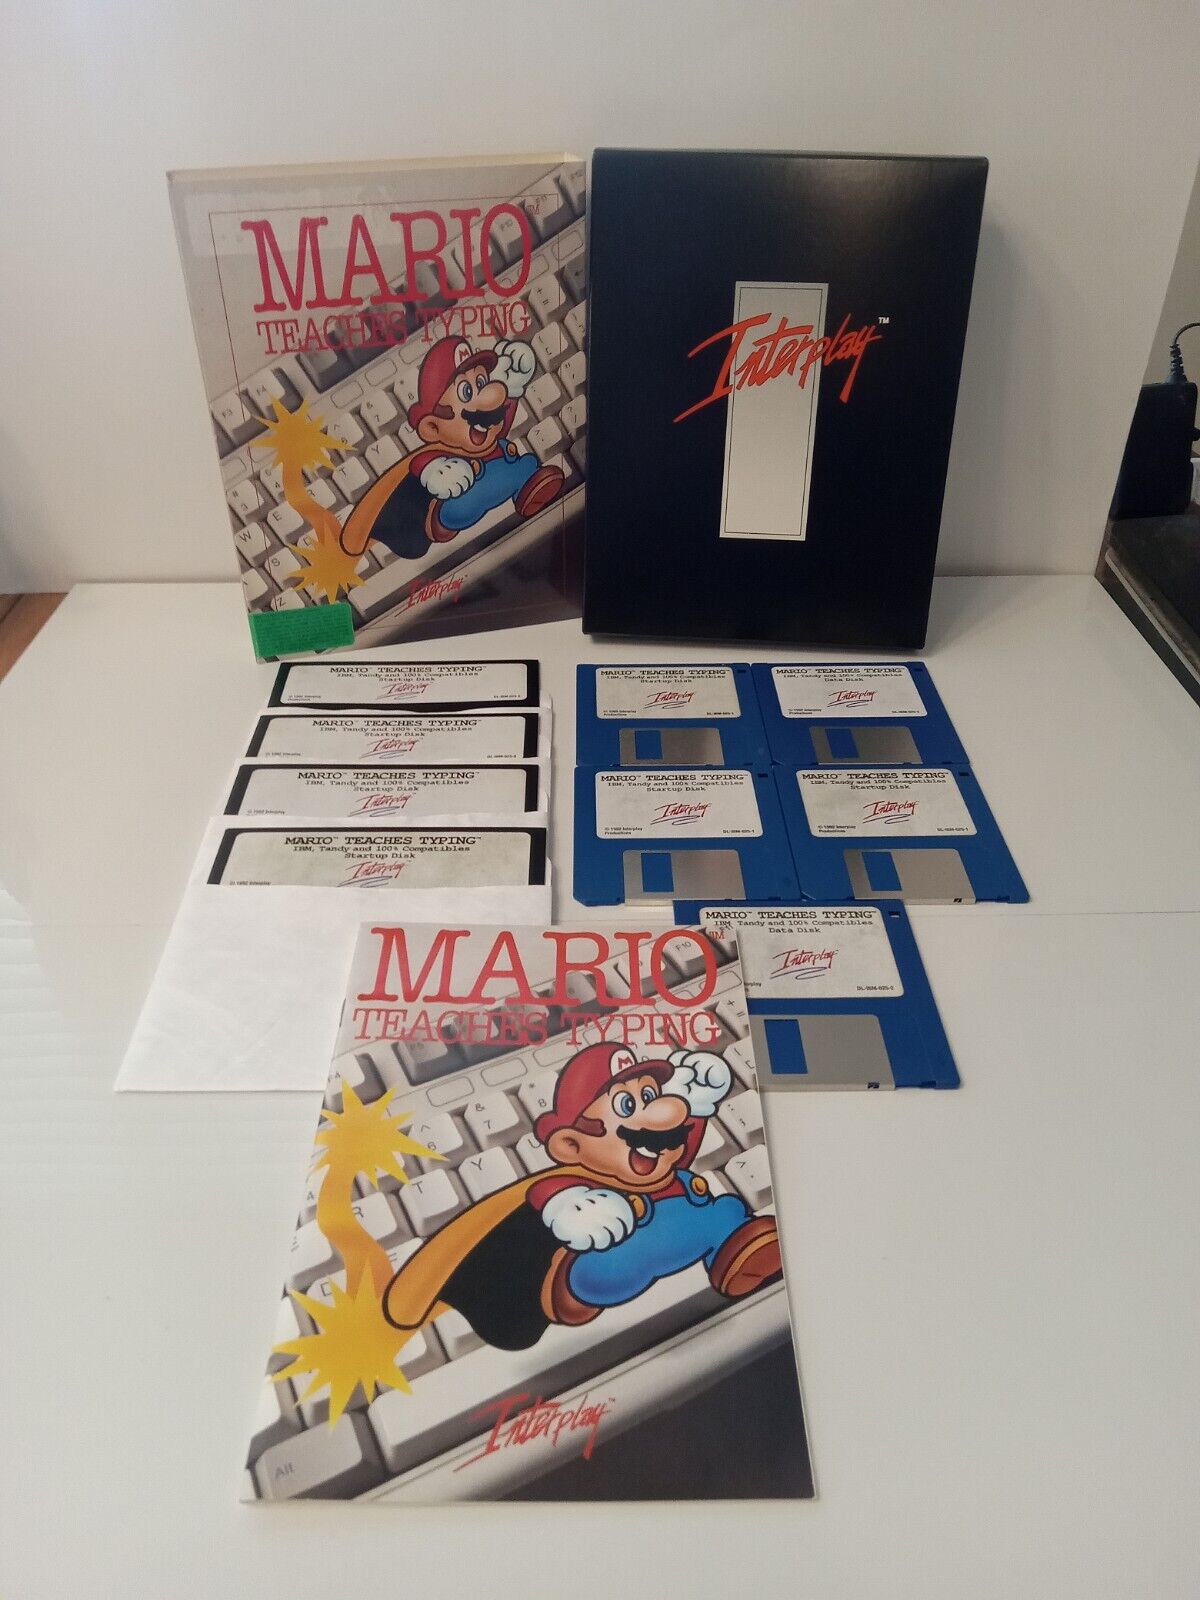 1992 IBM PC “Mario Teaches Typing” Manual 3.5” 5.25” Disks Vintage Nintendo